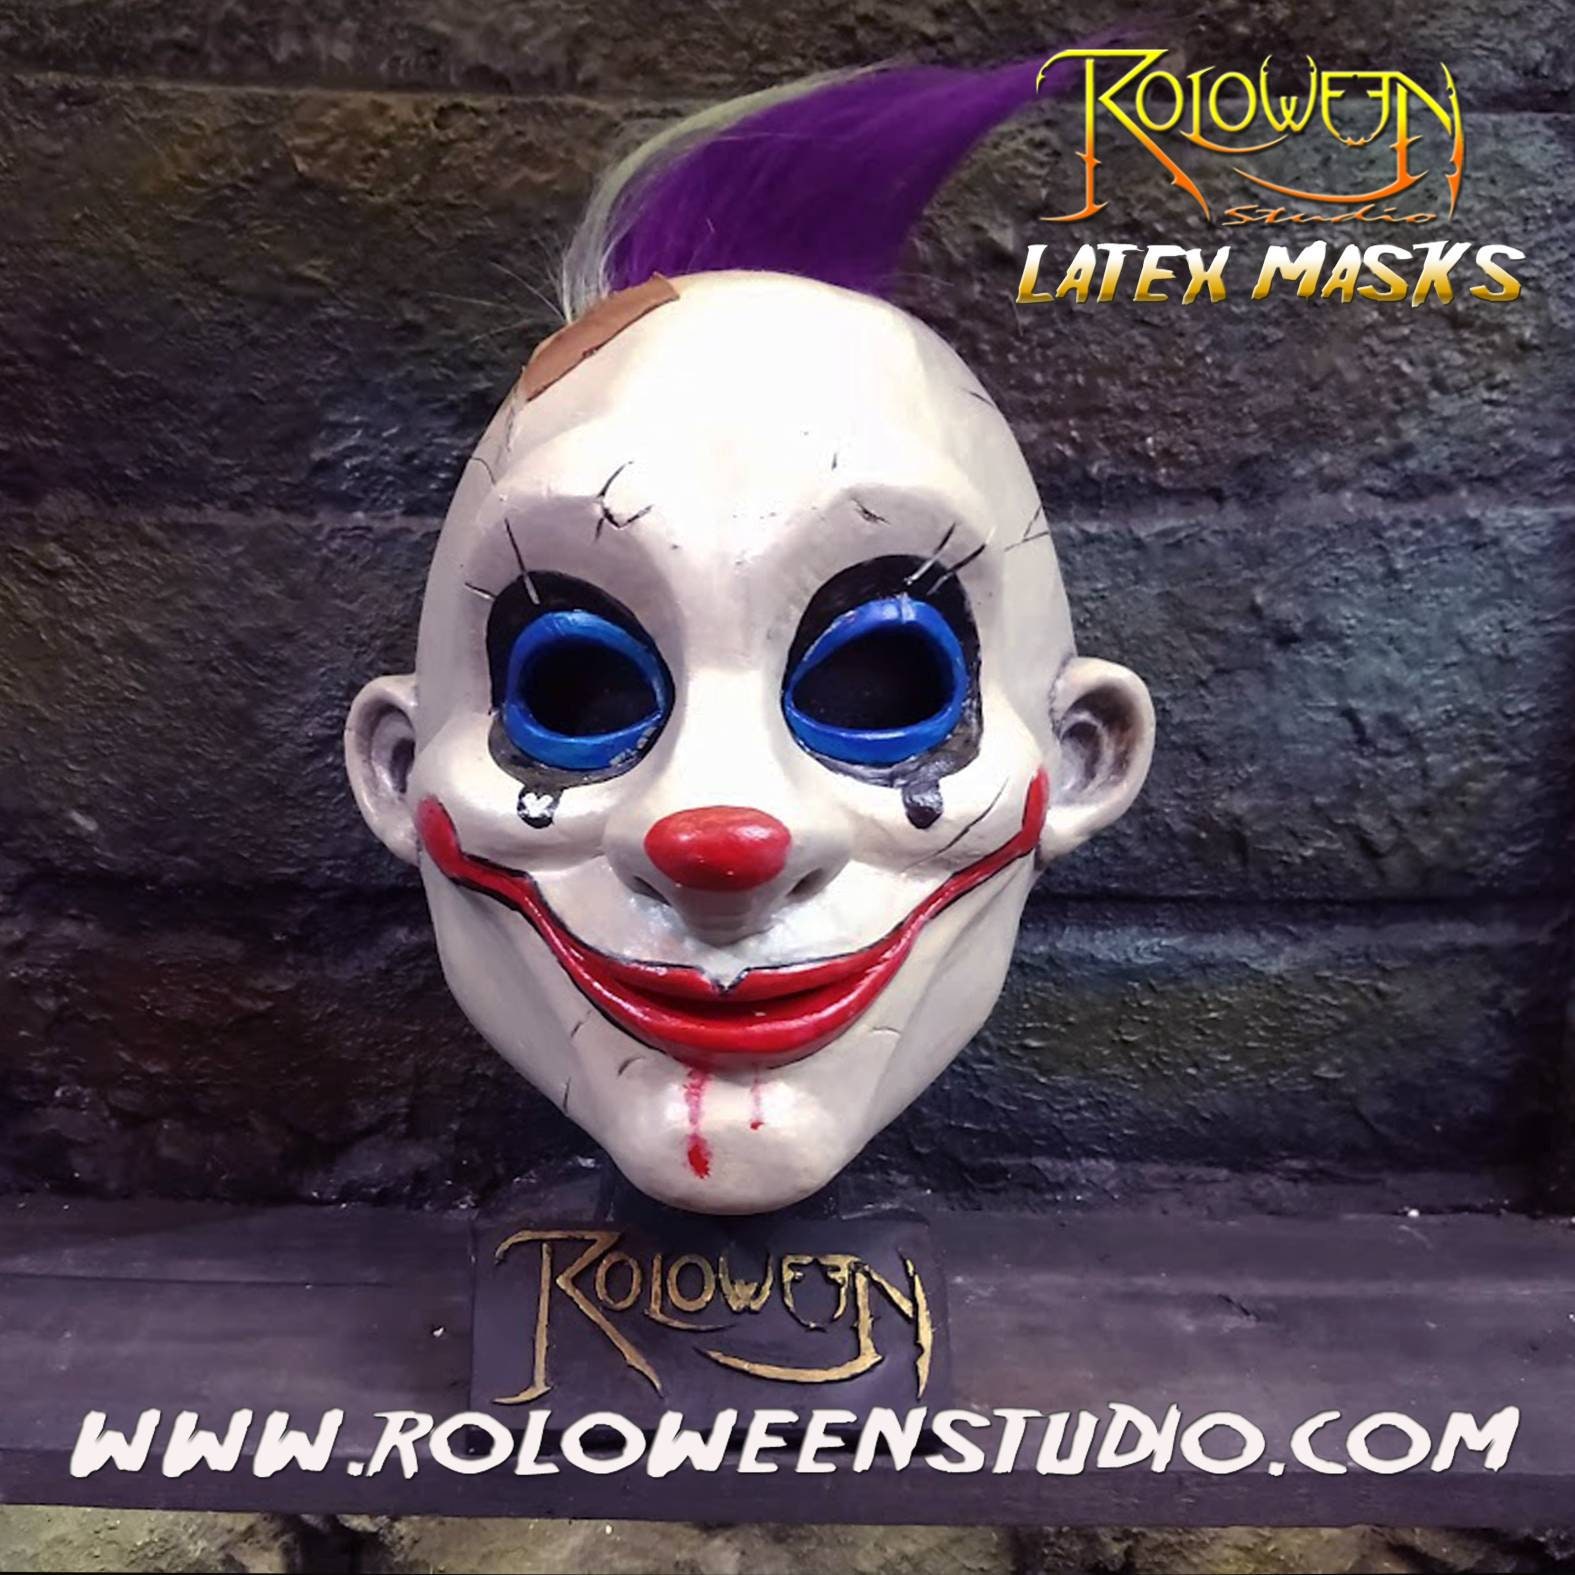 udskille tigger krise Grumpy Clown Latex Mask Joker Robber Bankthe Dark Knight - Etsy